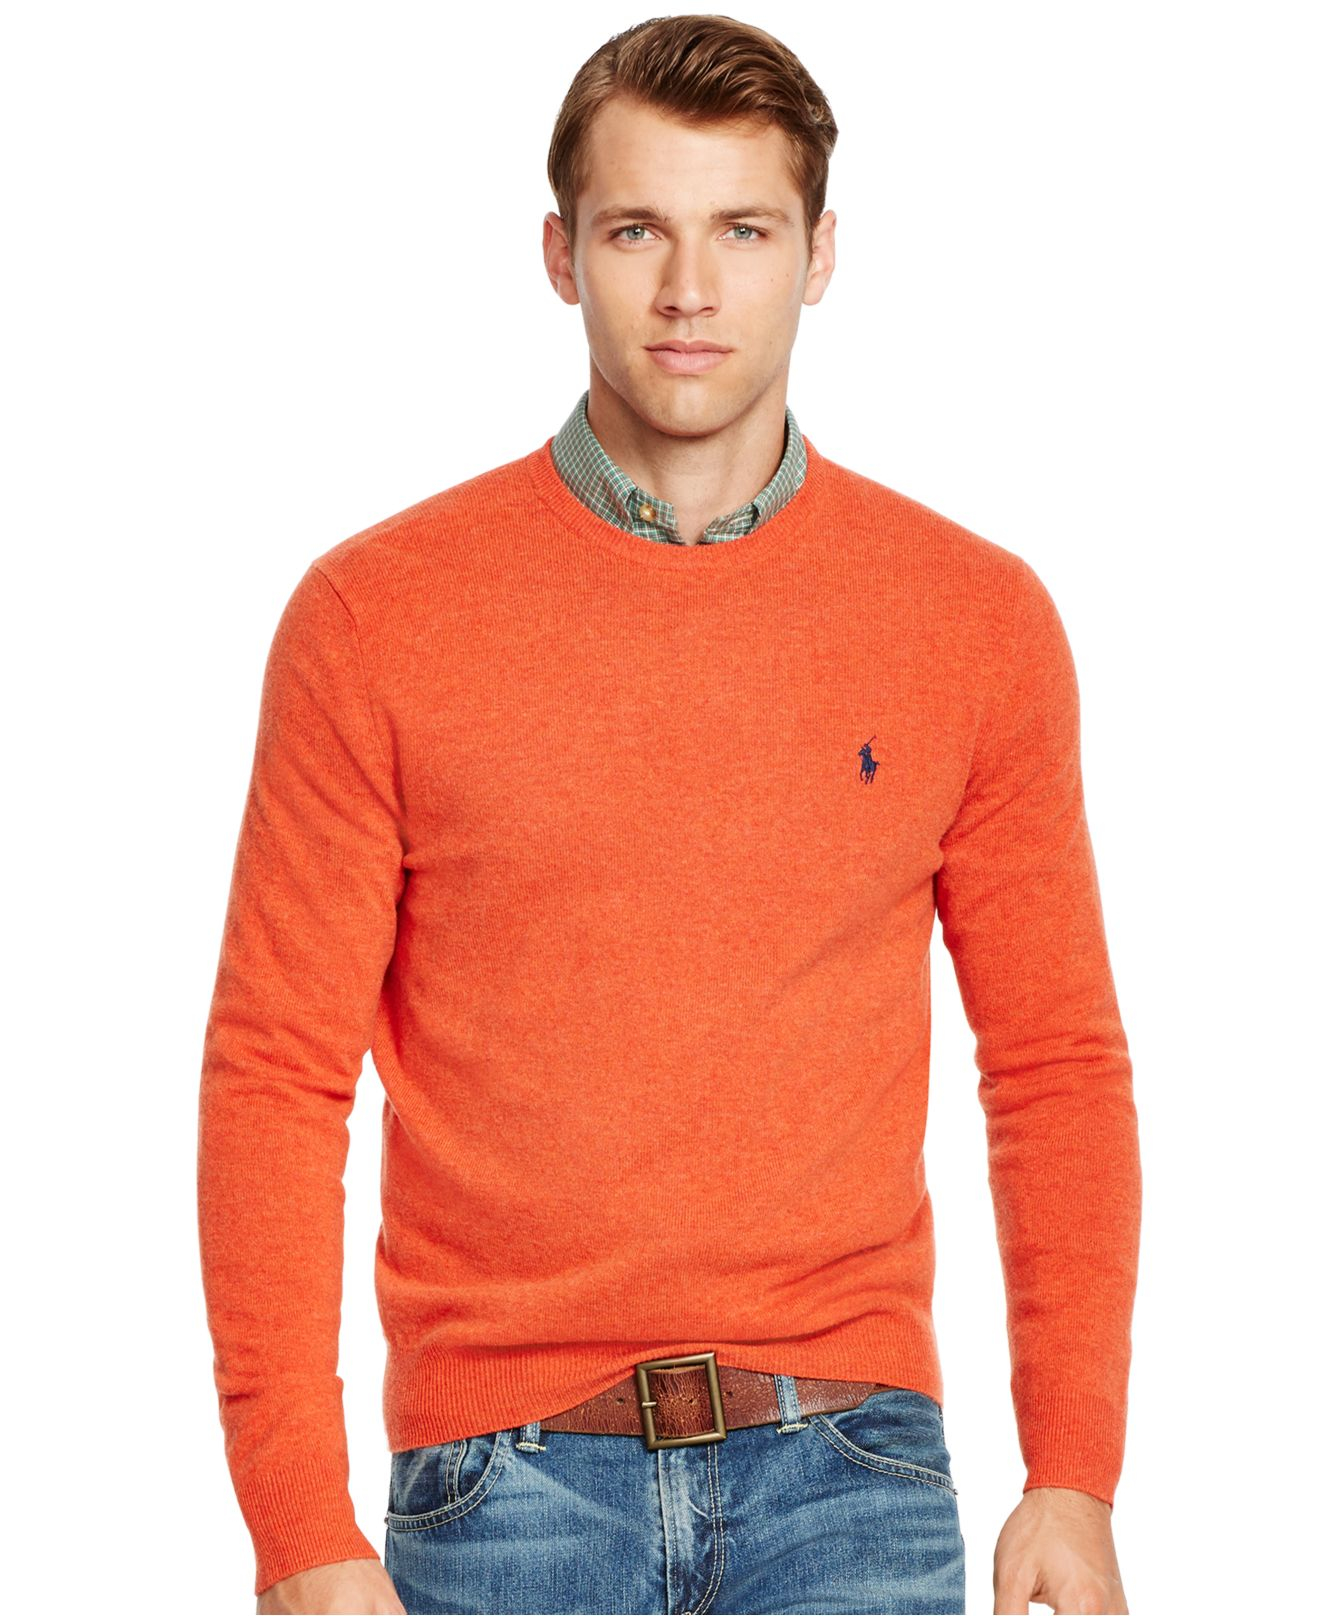 Lyst - Polo Ralph Lauren Merino Crew-neck Sweater in Orange for Men